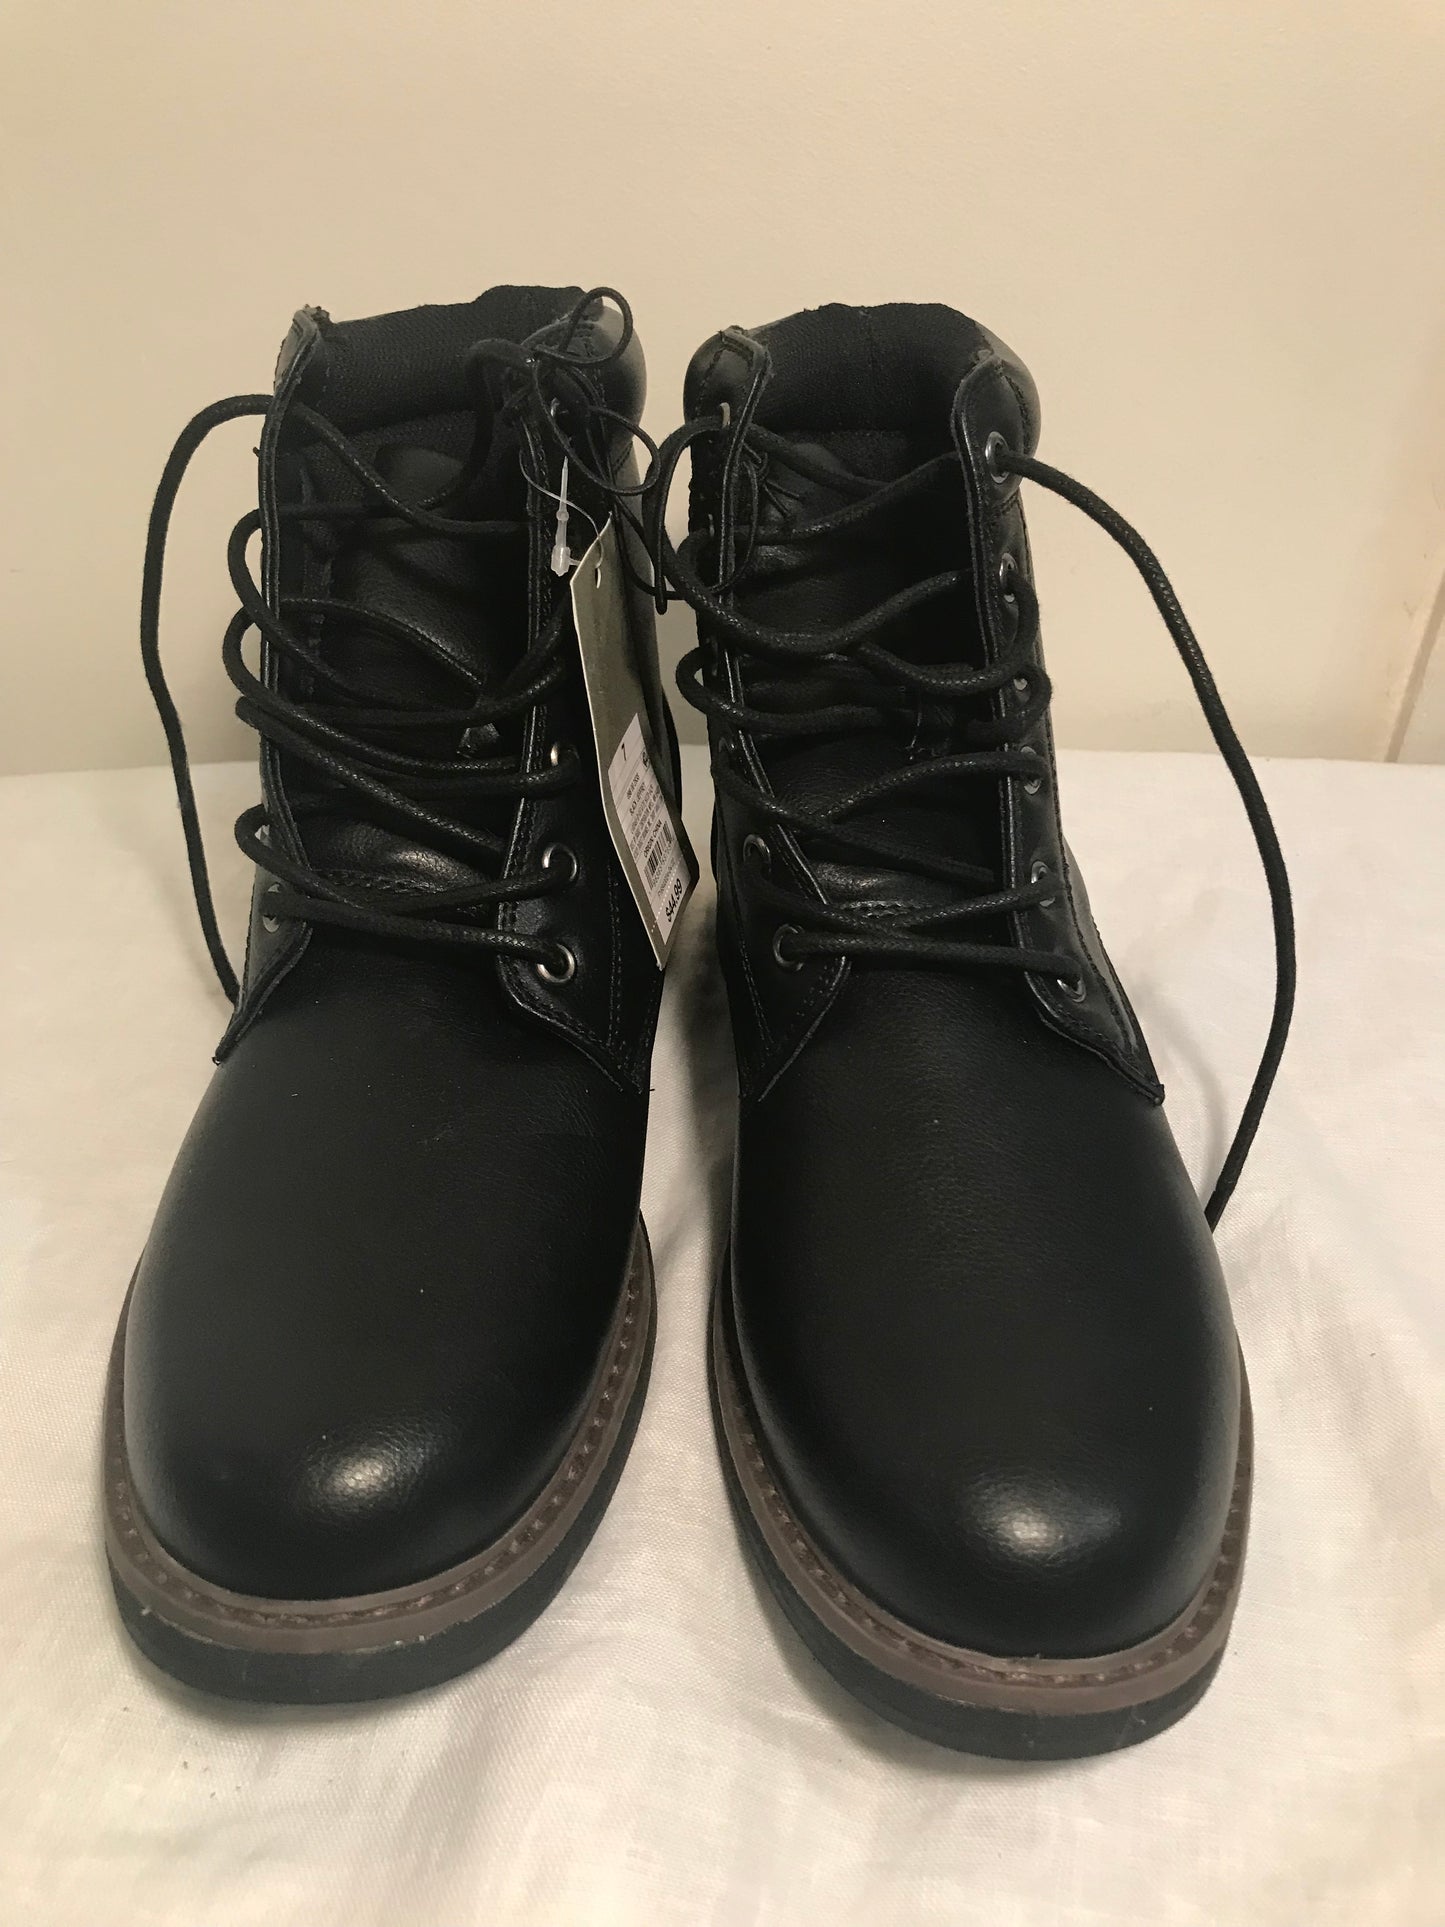 Boy's Black/Jeffery Boots Size 7